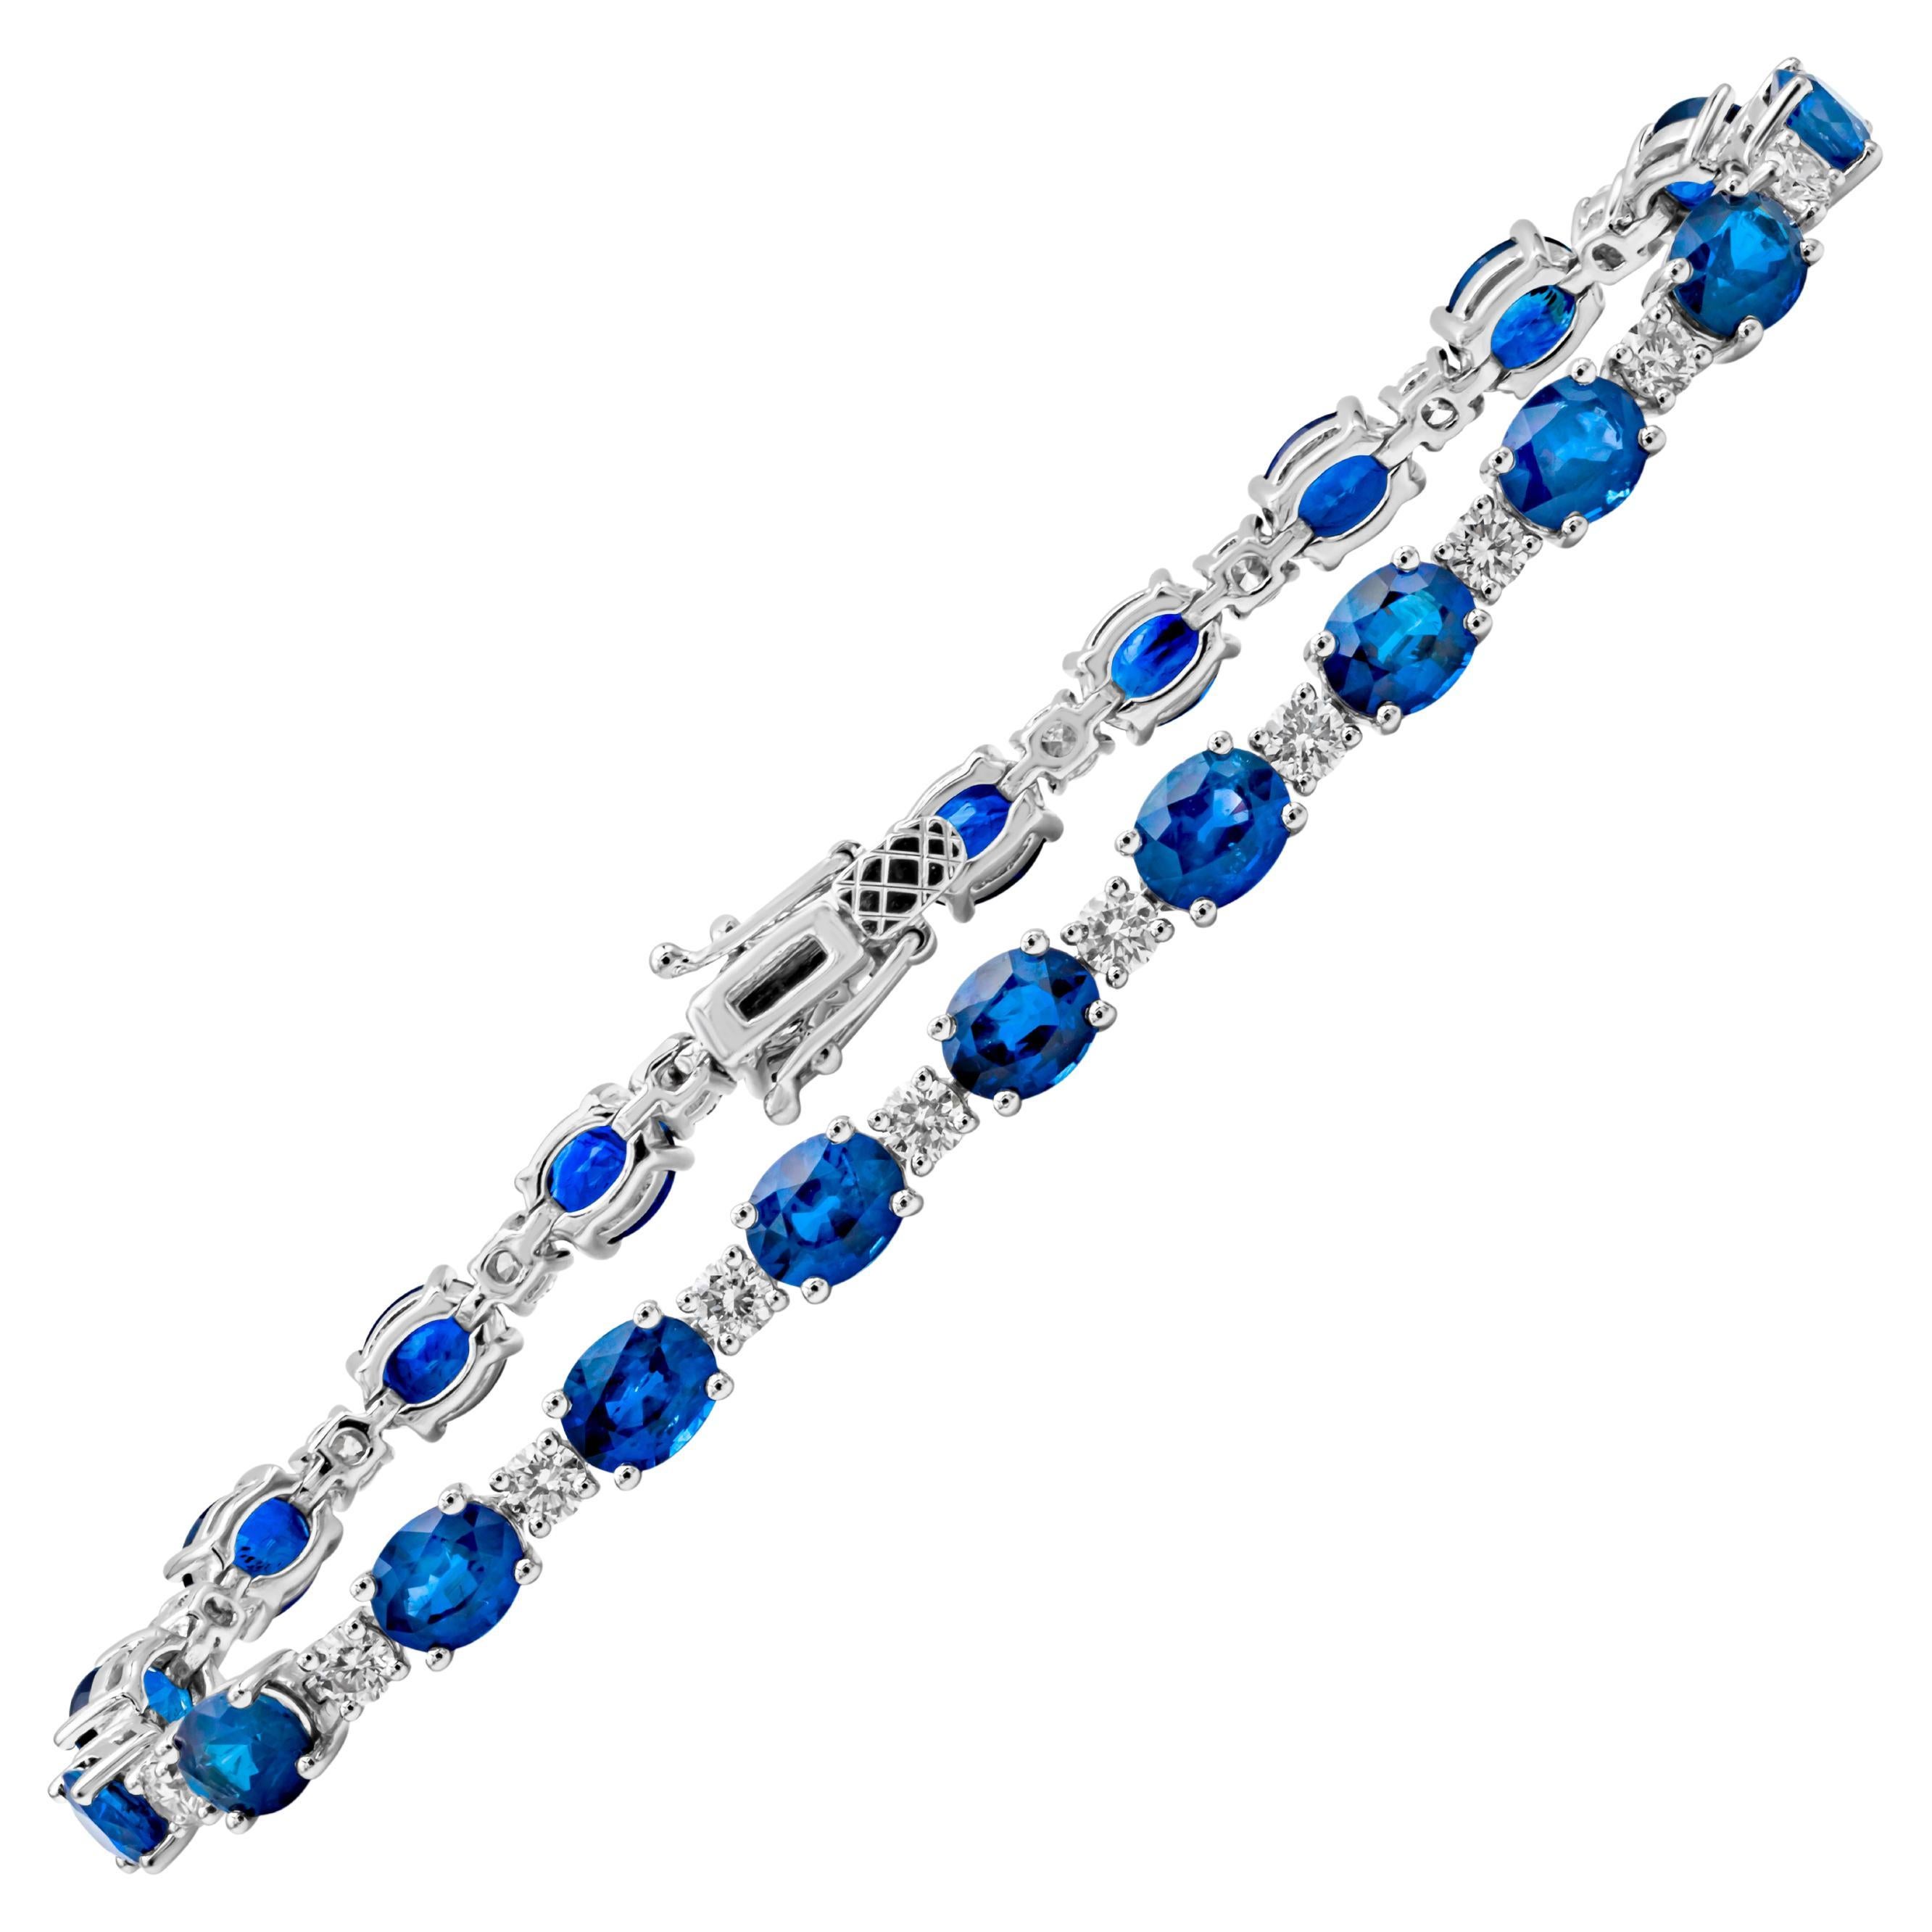 Roman Malakov 12.56 Carat Oval Cut Blue Sapphire with Diamond Tennis Bracelet